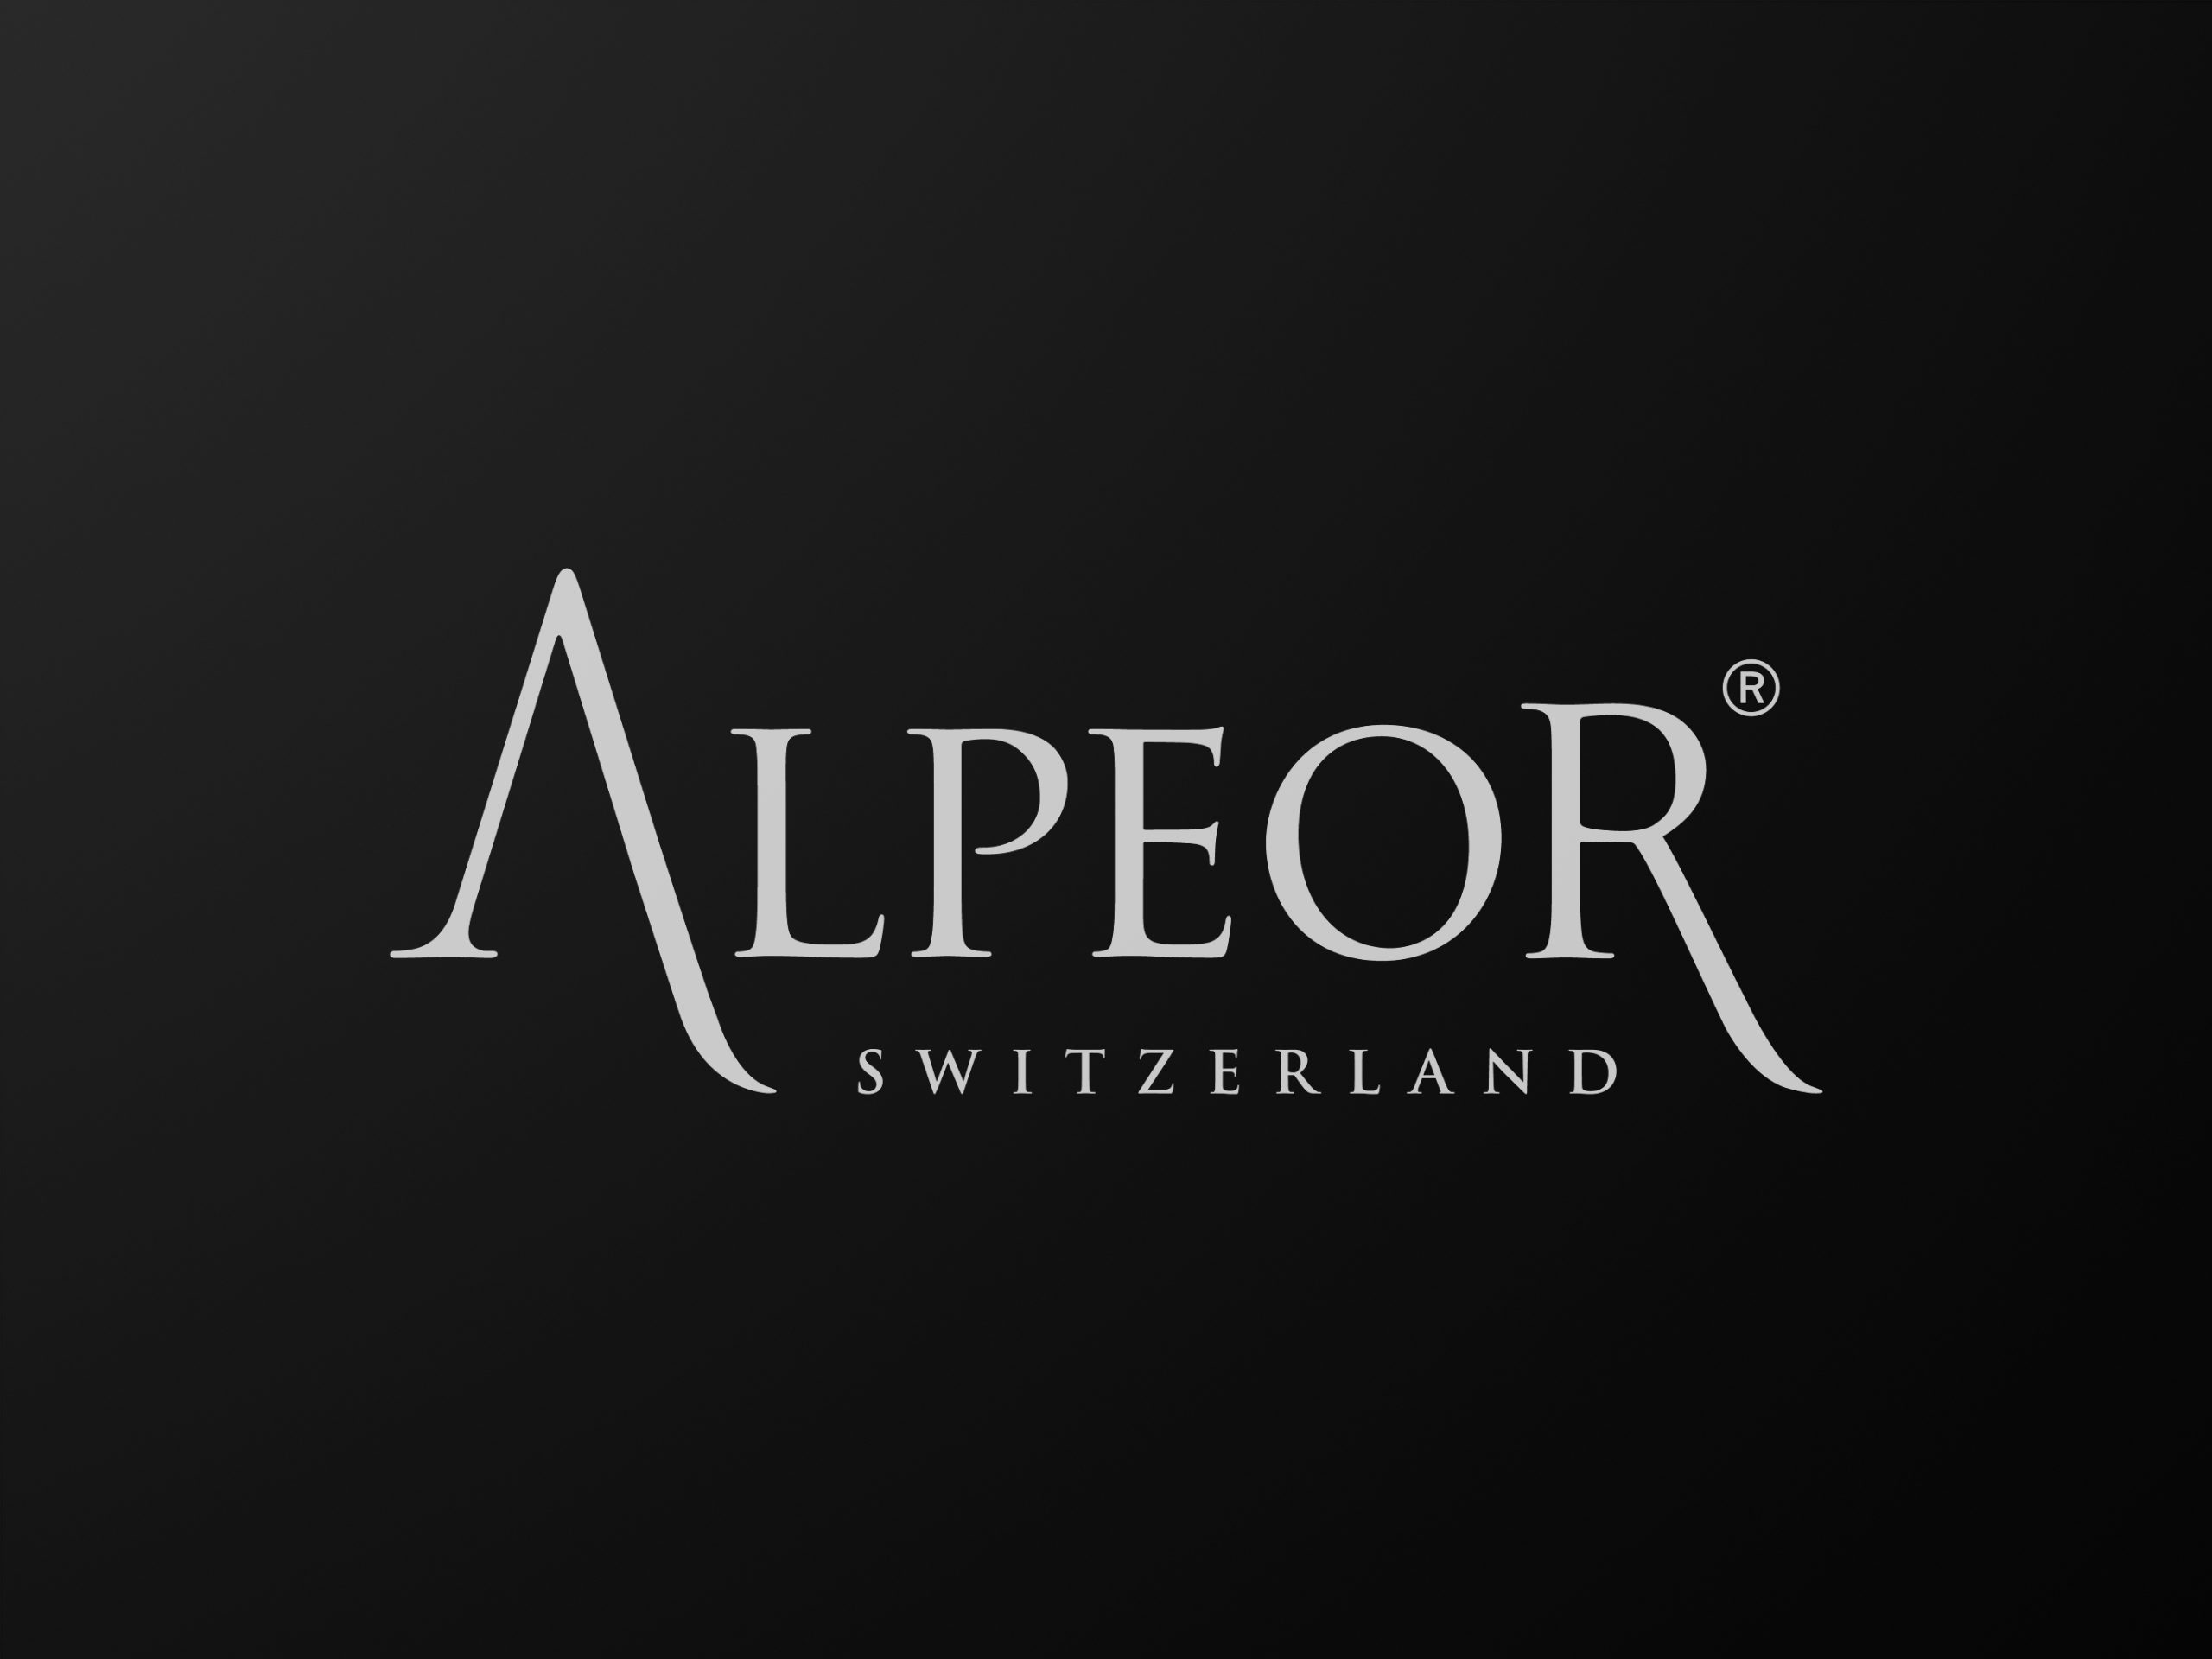 ALPEOR nouveau logo 1 scaled